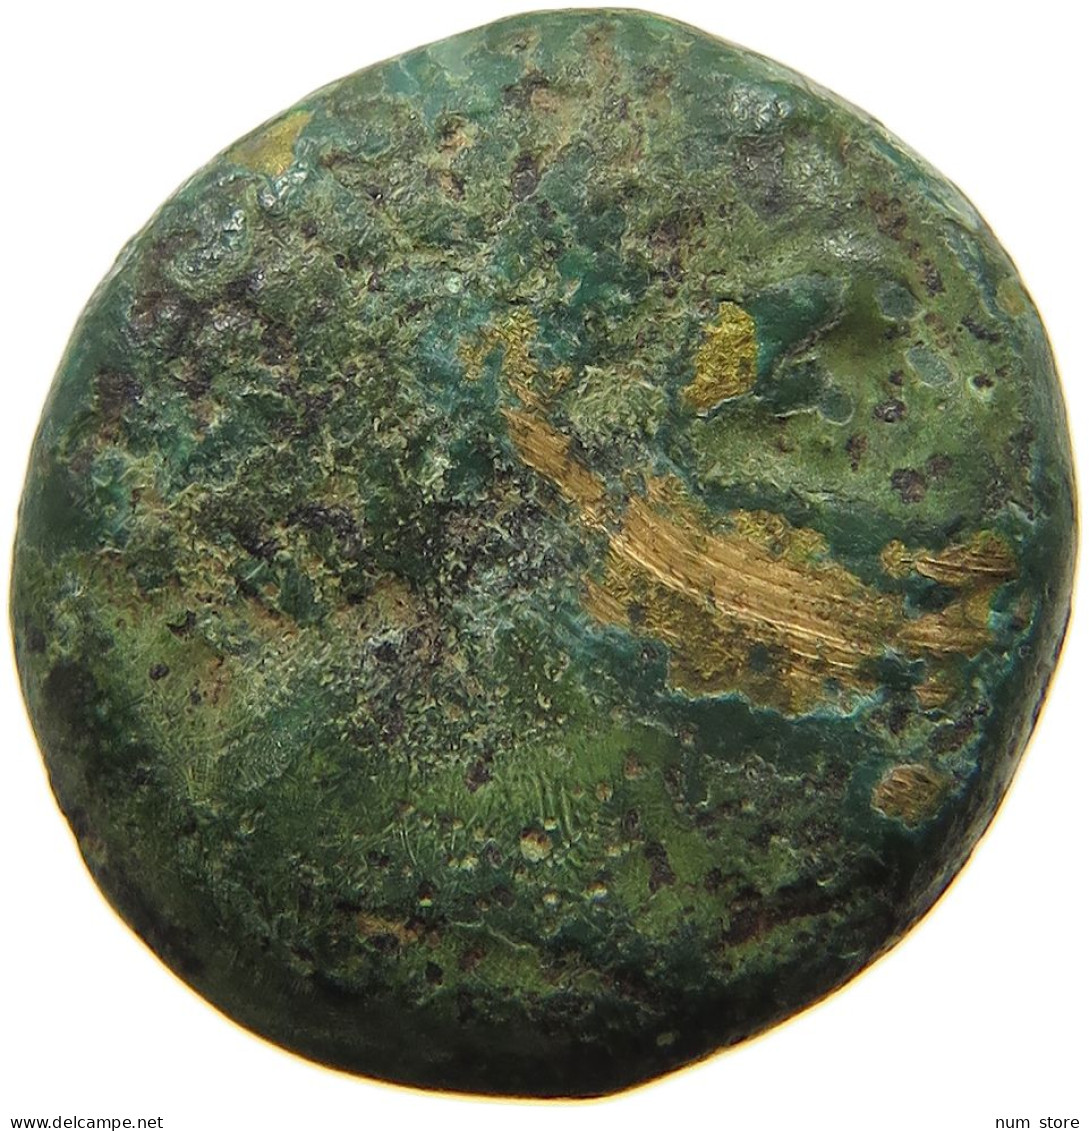 CELTIC DANUBE AE  DANUBE PHILIPP II. #t129 0851 - Keltische Münzen